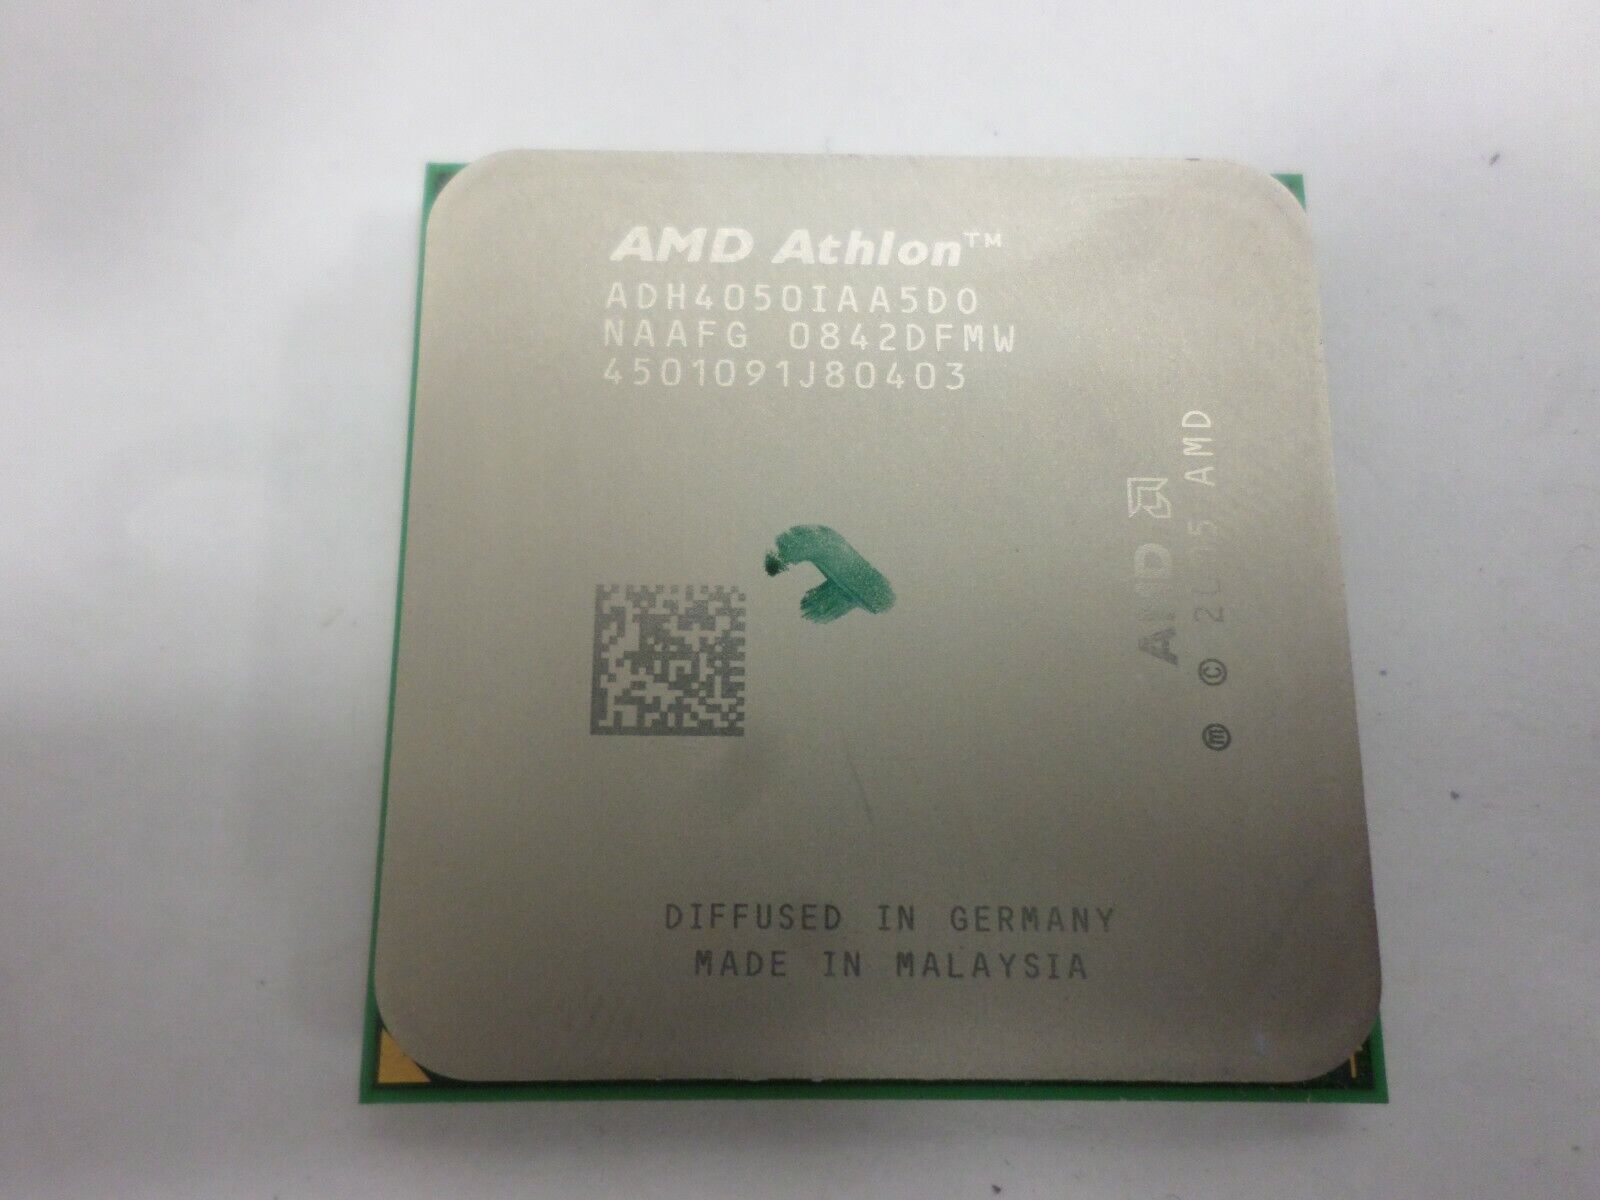 AMD Athlon ADH4050IAA5D0 Dual Core 2.10GHz 200MHz 1MB Cache Socket AM2 Processor